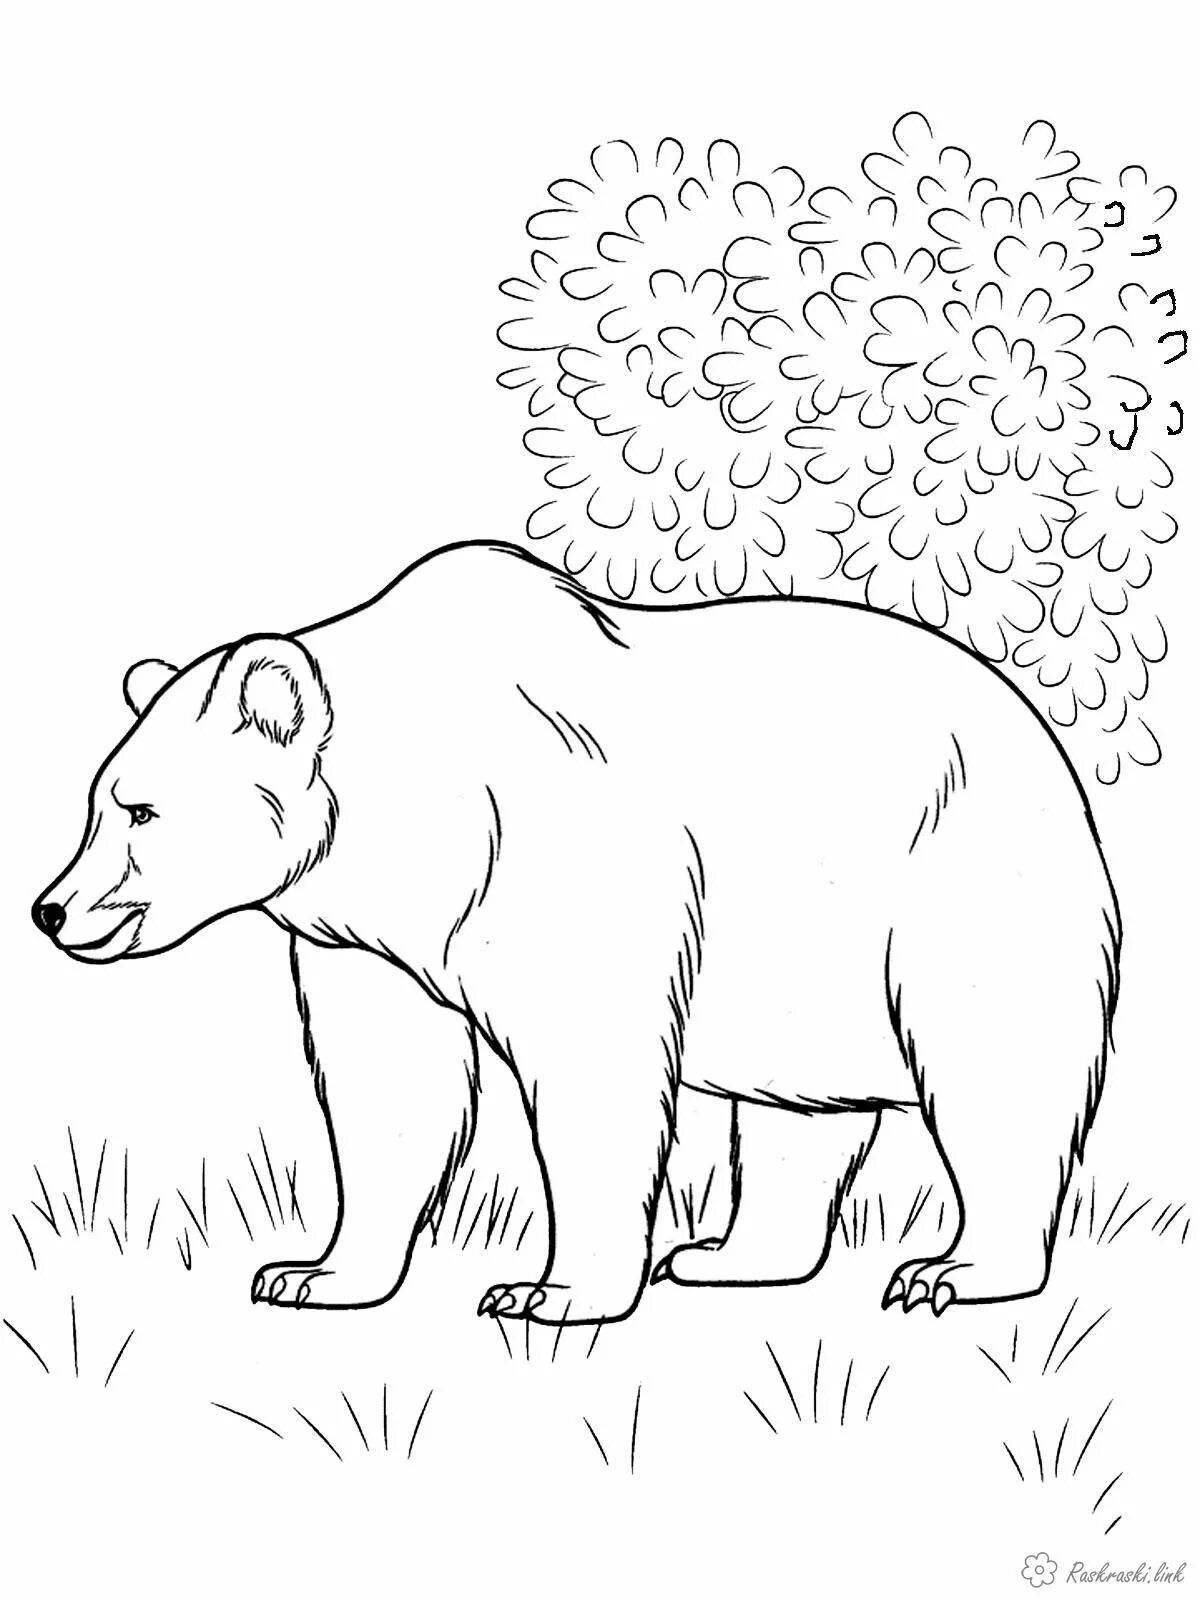 Ferocious bear coloring page